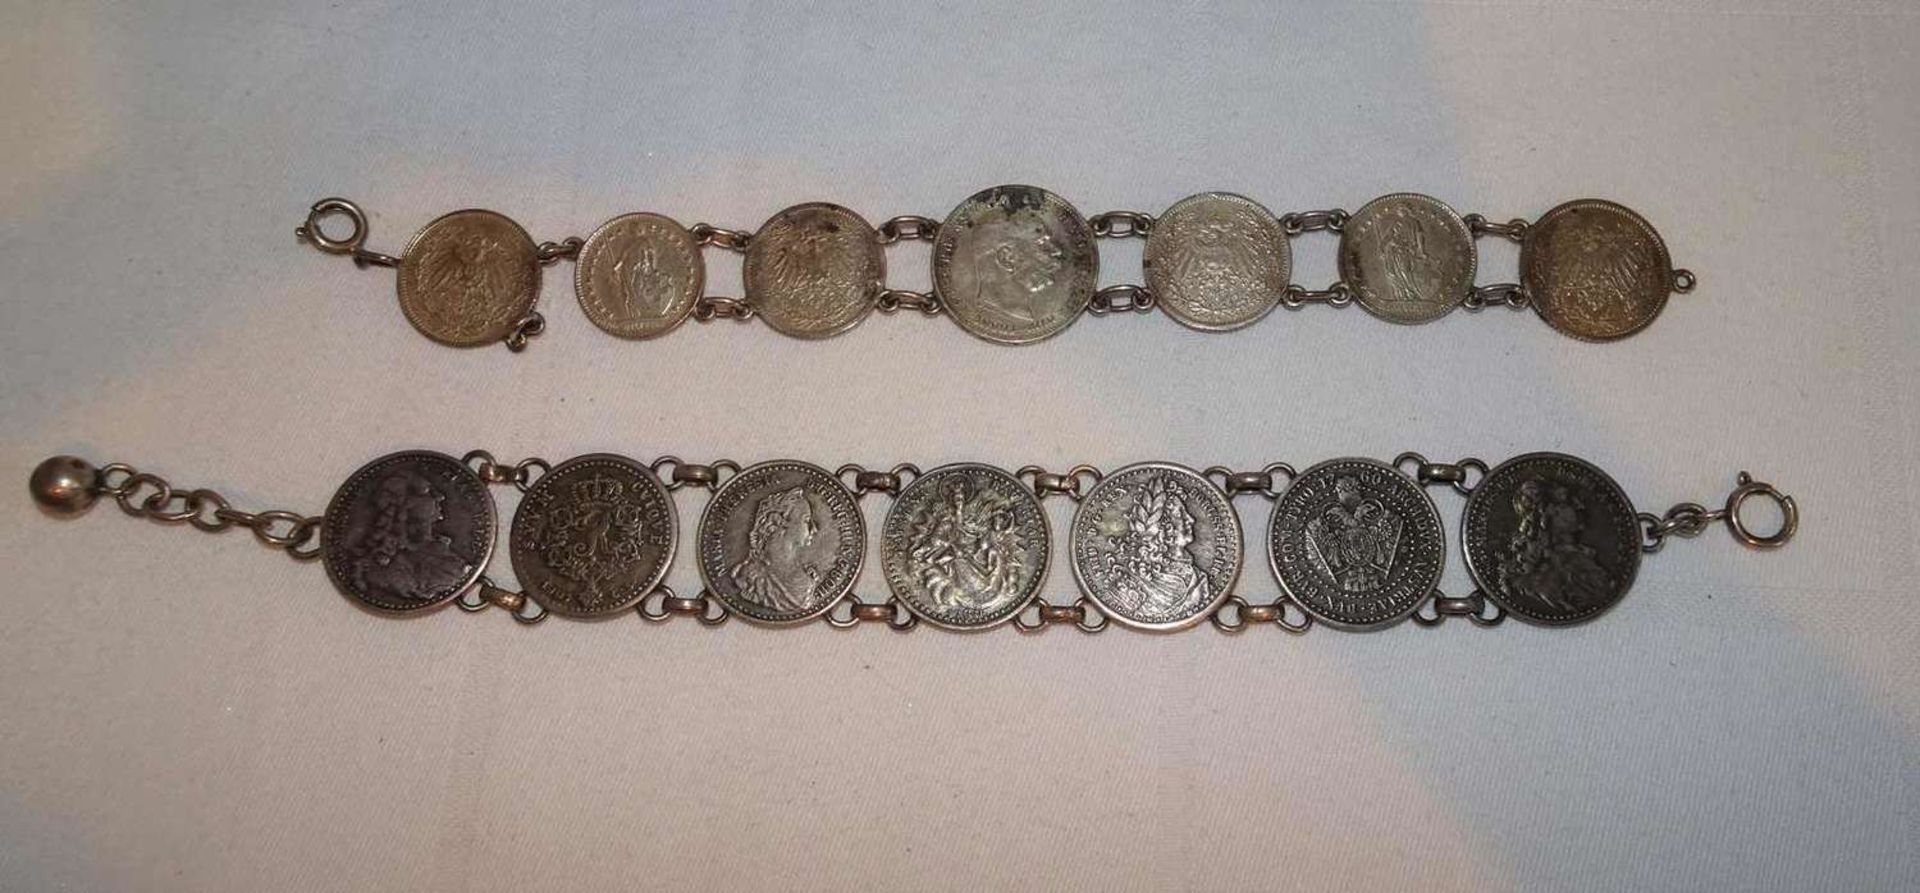 2 alte Münzarmbänder, Länge ca. 18-22 cm2 old coin bracelets, length approx. 18-22 cm